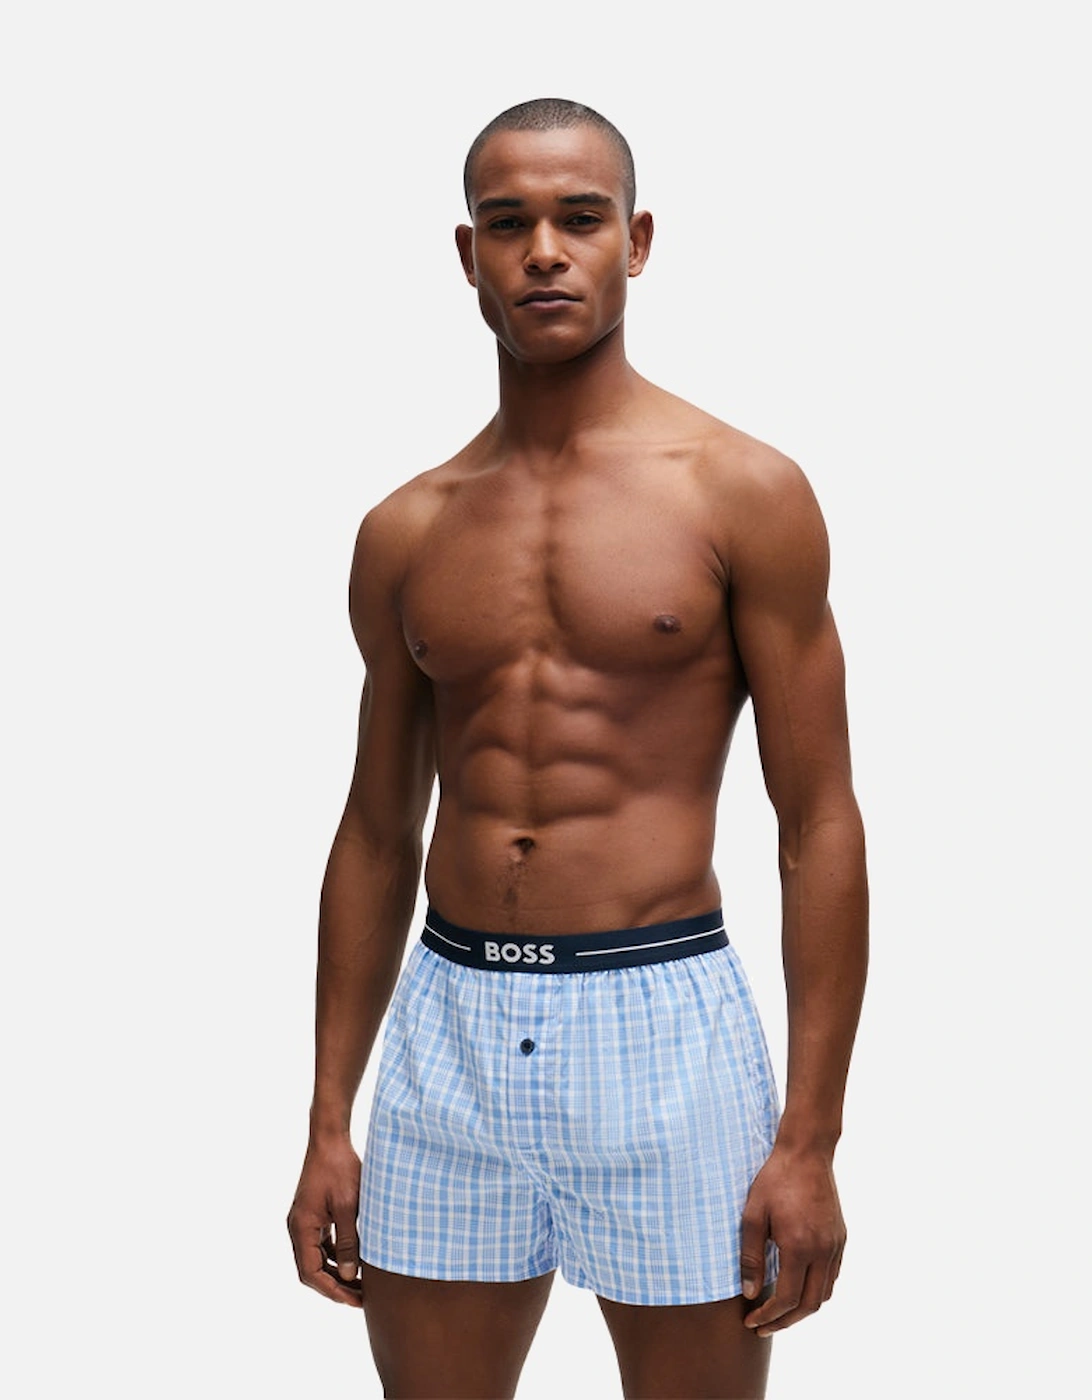 2-Pack Check & Stripe Boxer Shorts, Sky Blue